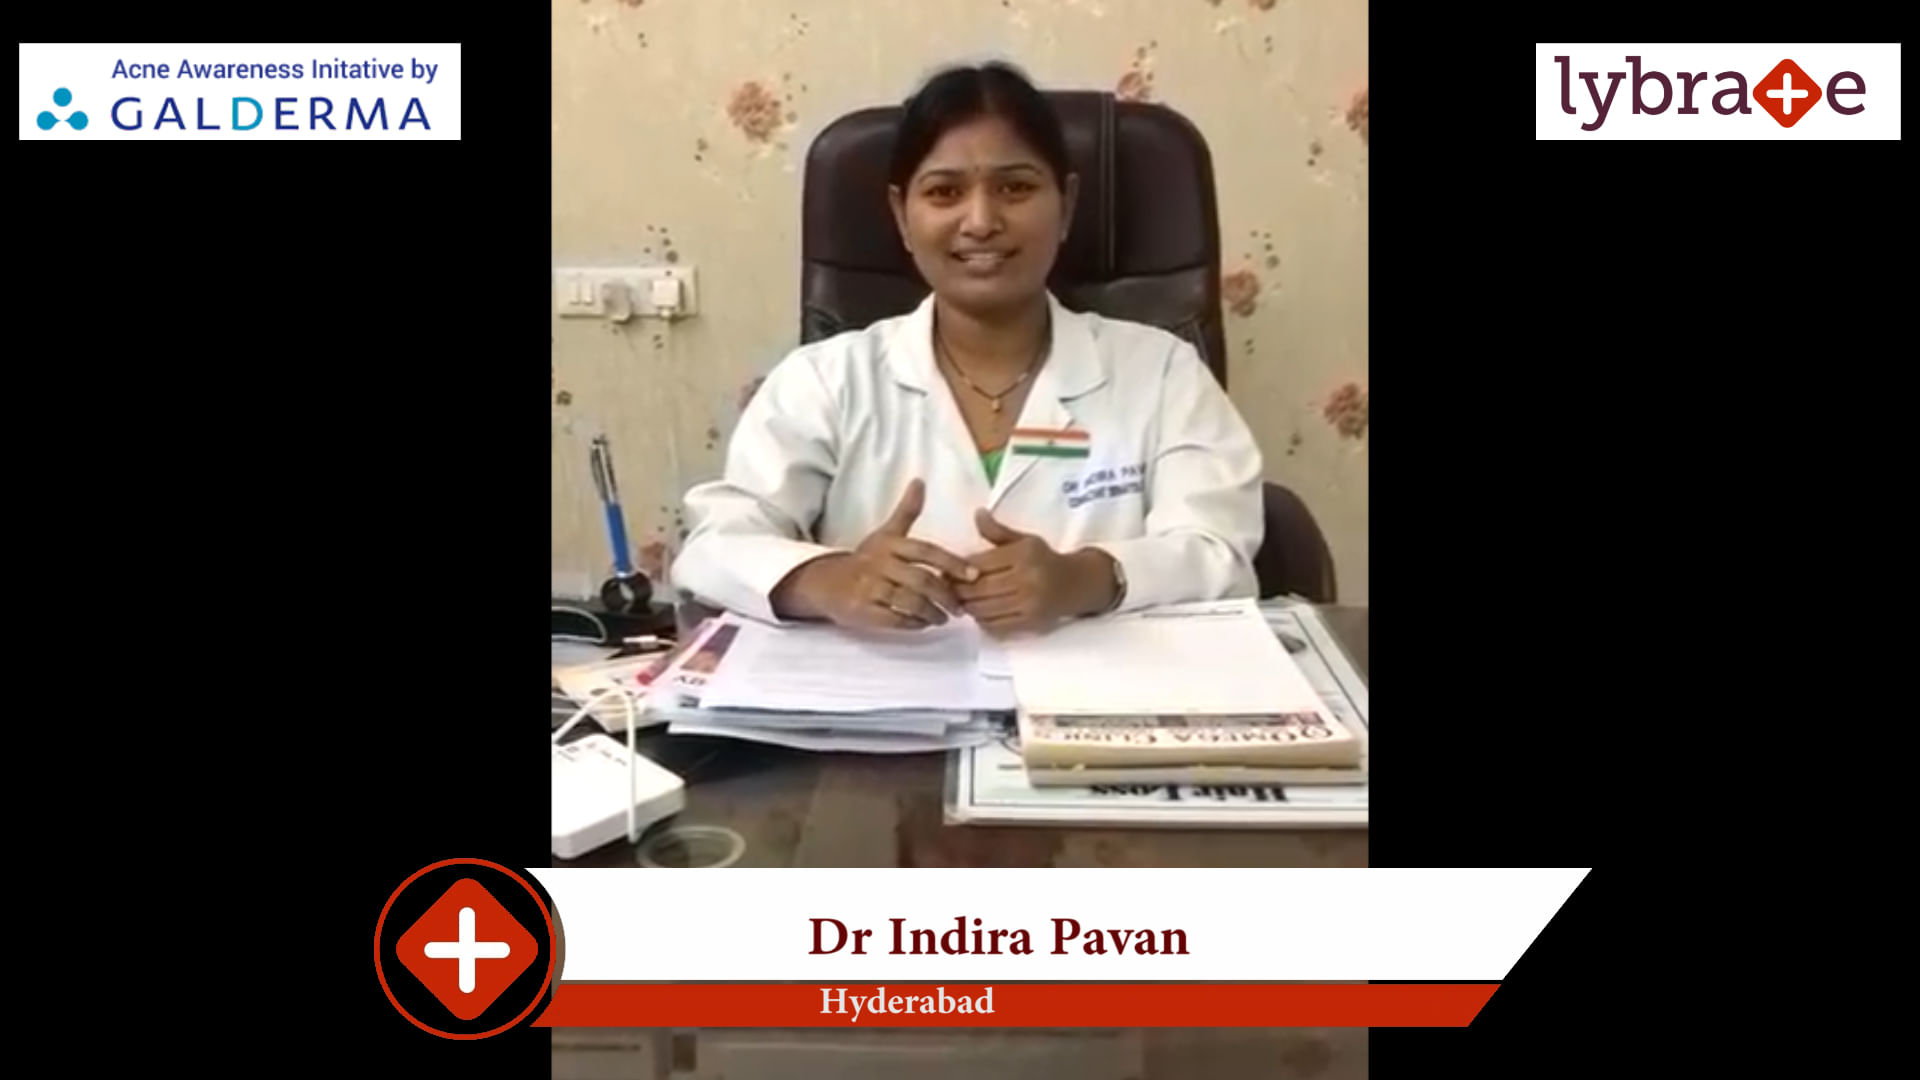 Lybrate | Dr. Indira Pavan speaks on IMPORTANCE OF TREATING ACNE EARLY